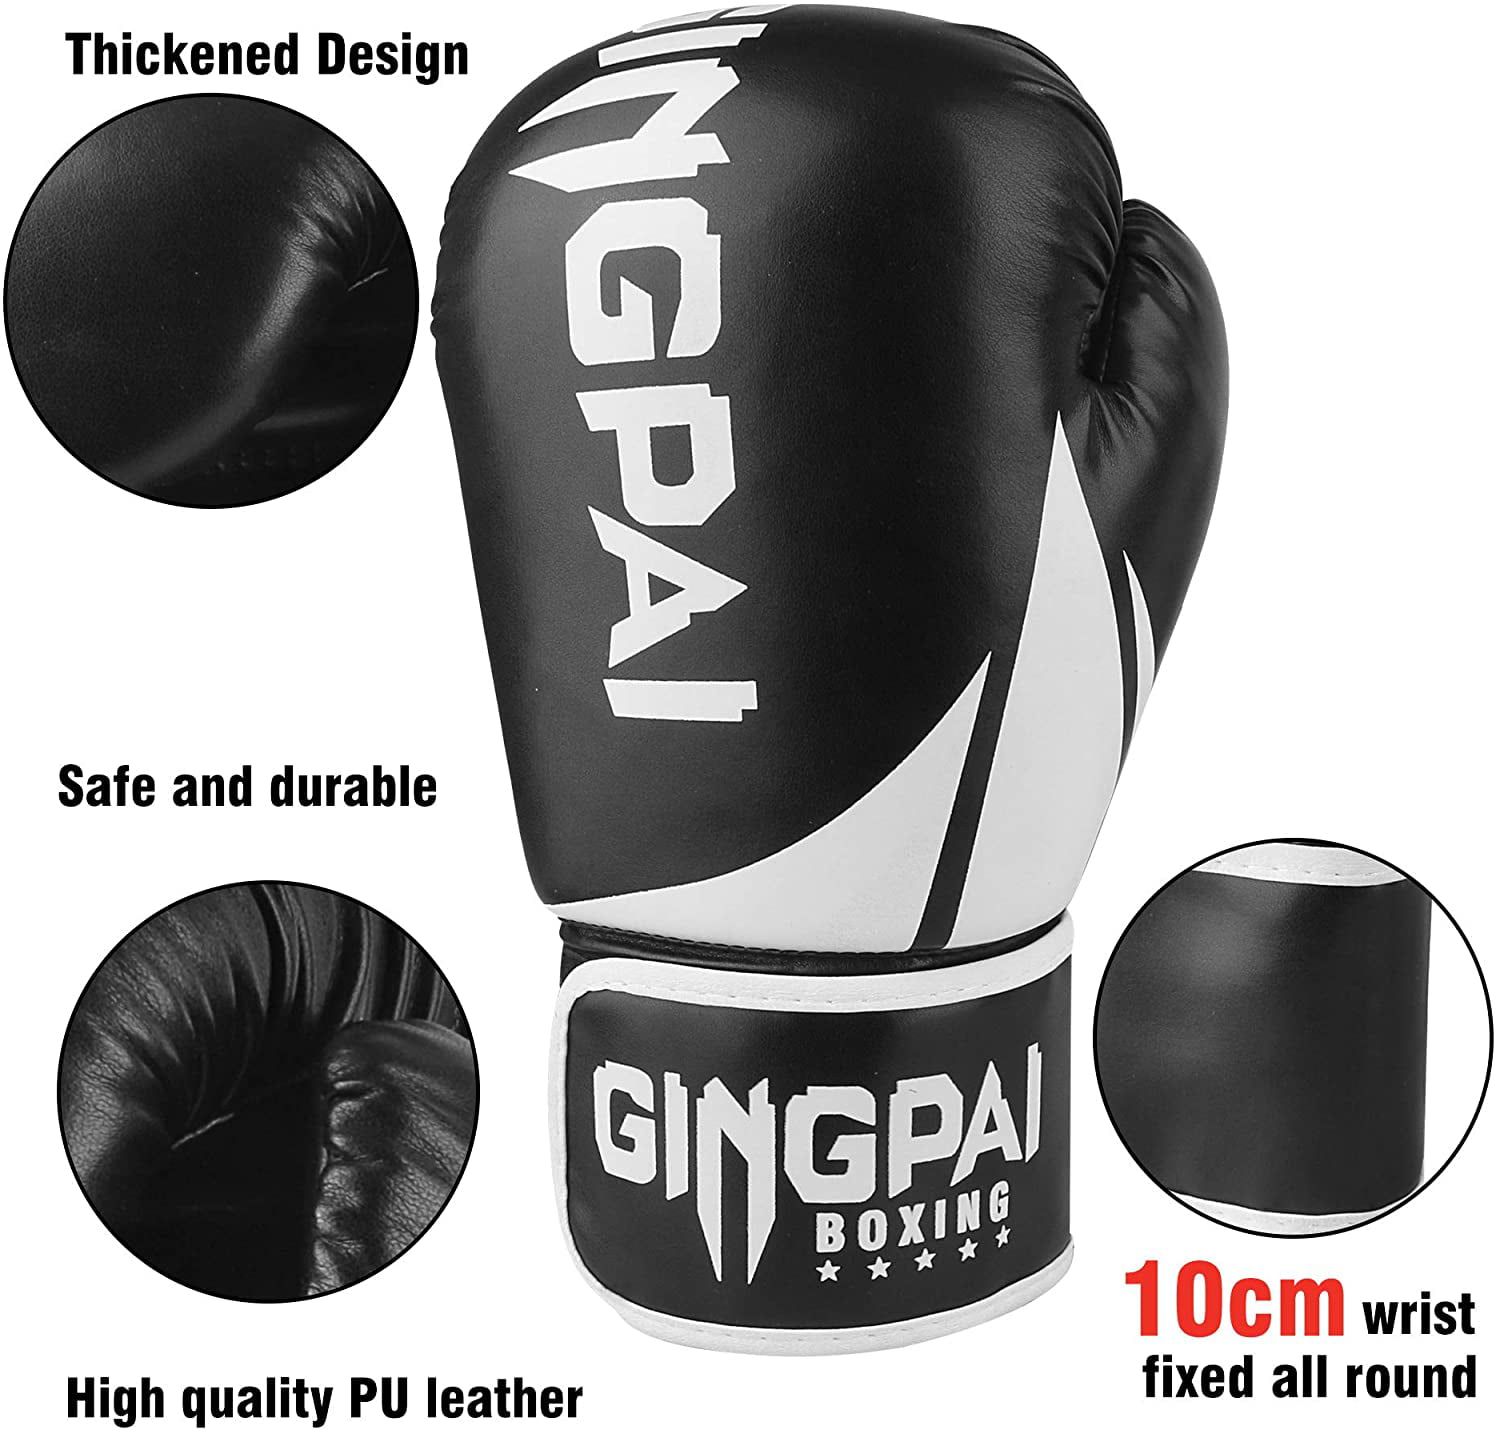 VELO Boxing Gloves Fight Punch Bag Muay thai MMA Training Kickboxing Sparring 